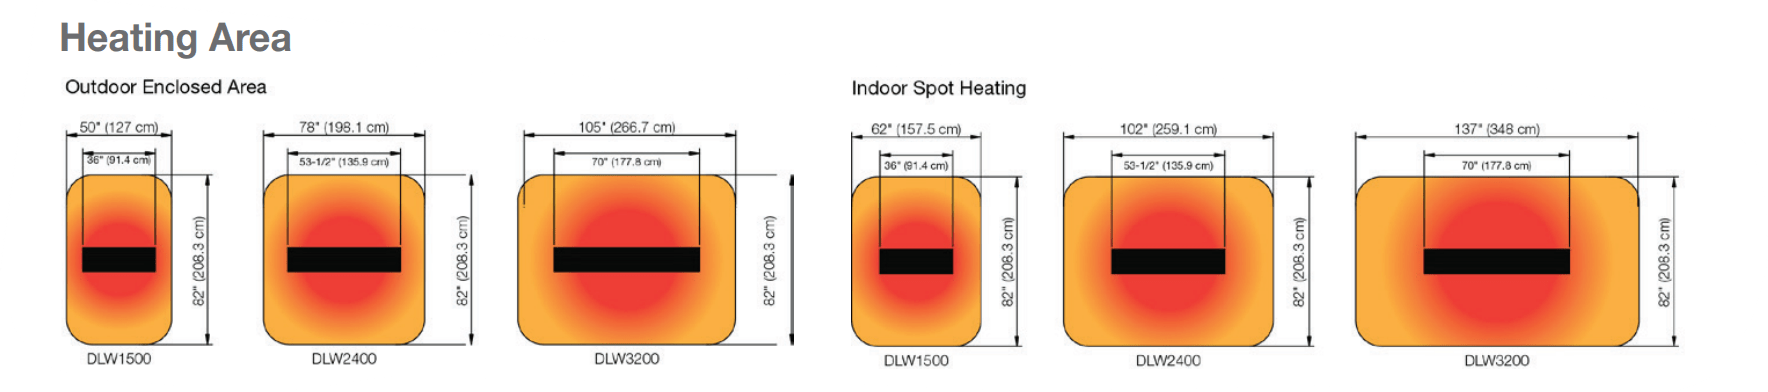 Dimplex DLW Series Outdoor / Indoor Radiant Heater (Black - 2400W / 240V)